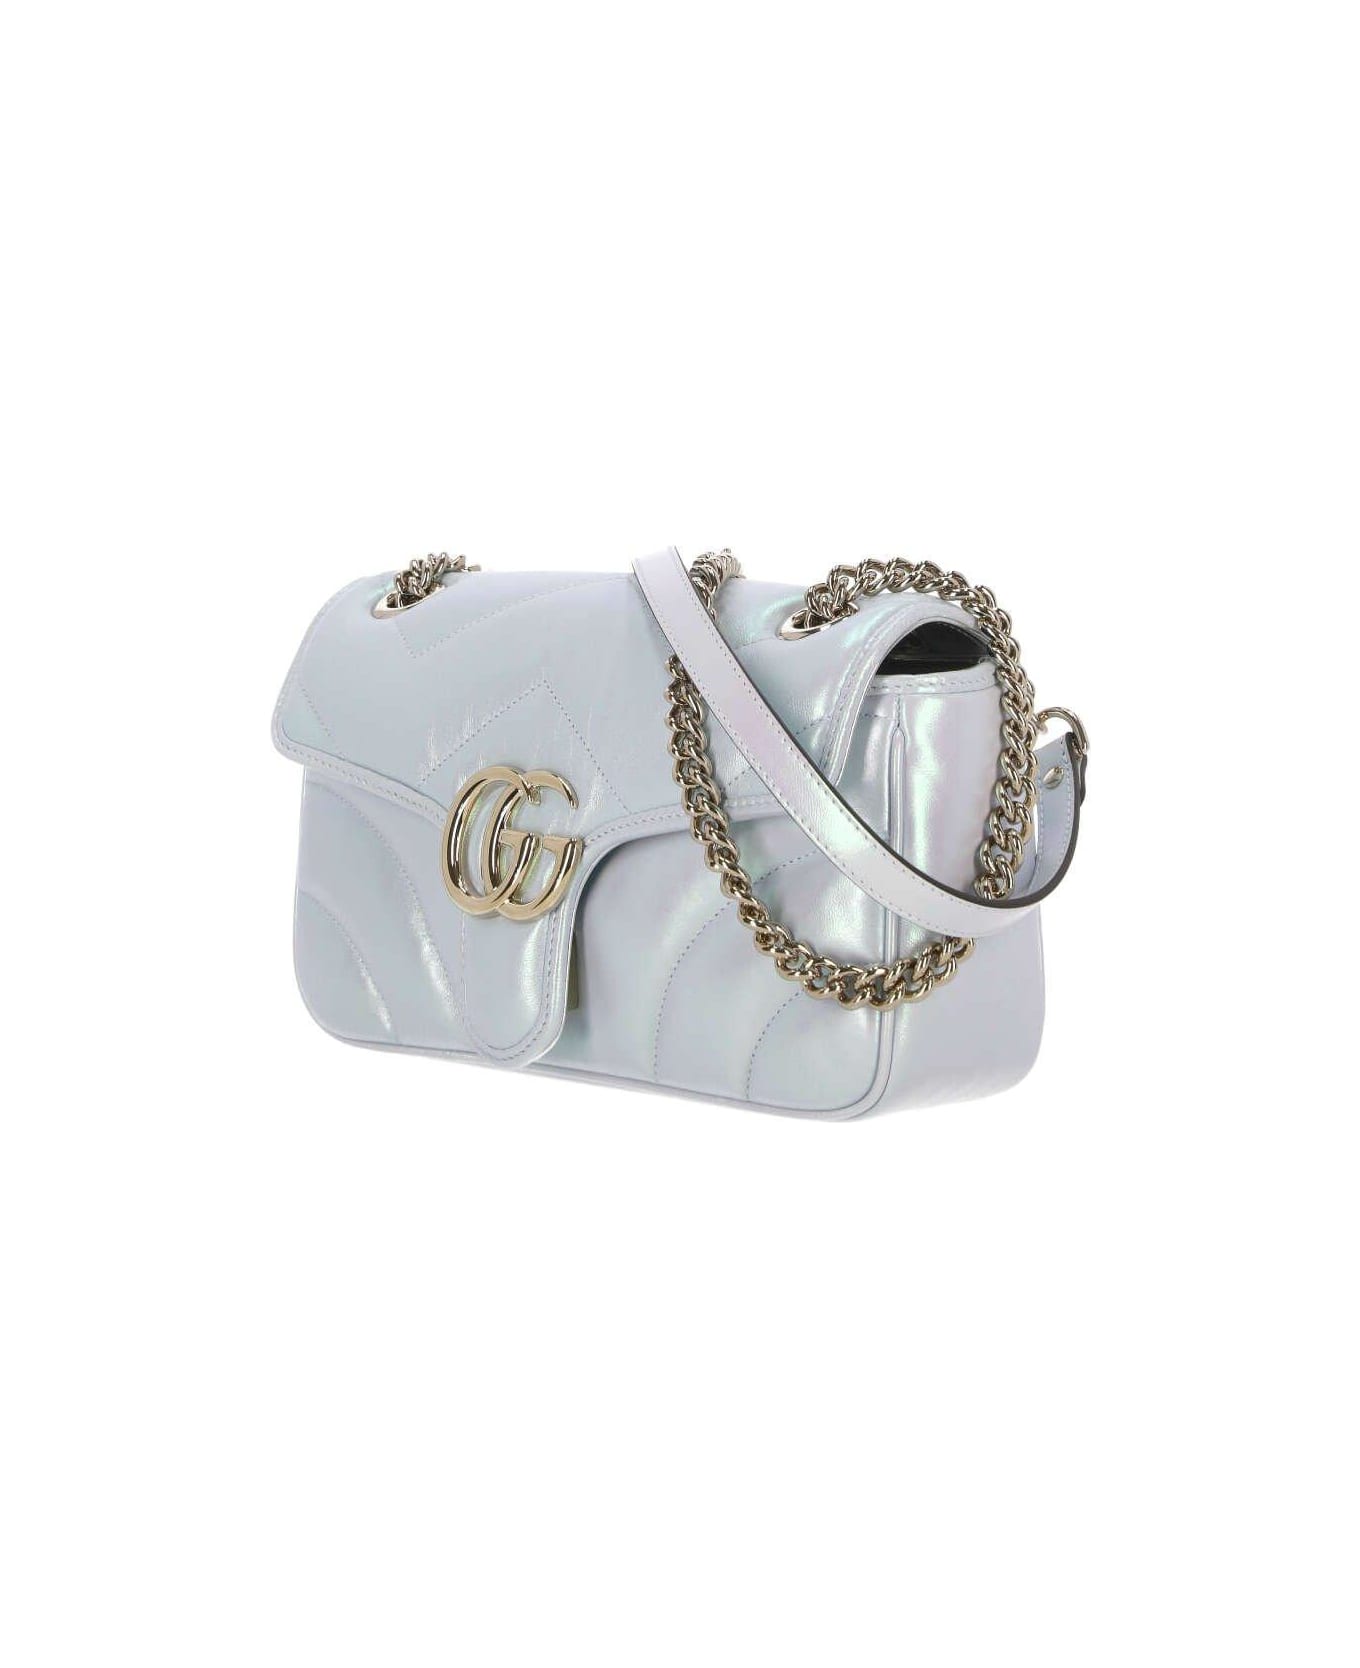 Gucci Gg Marmont Small Shoulder Bag - Iride Snow ショルダーバッグ